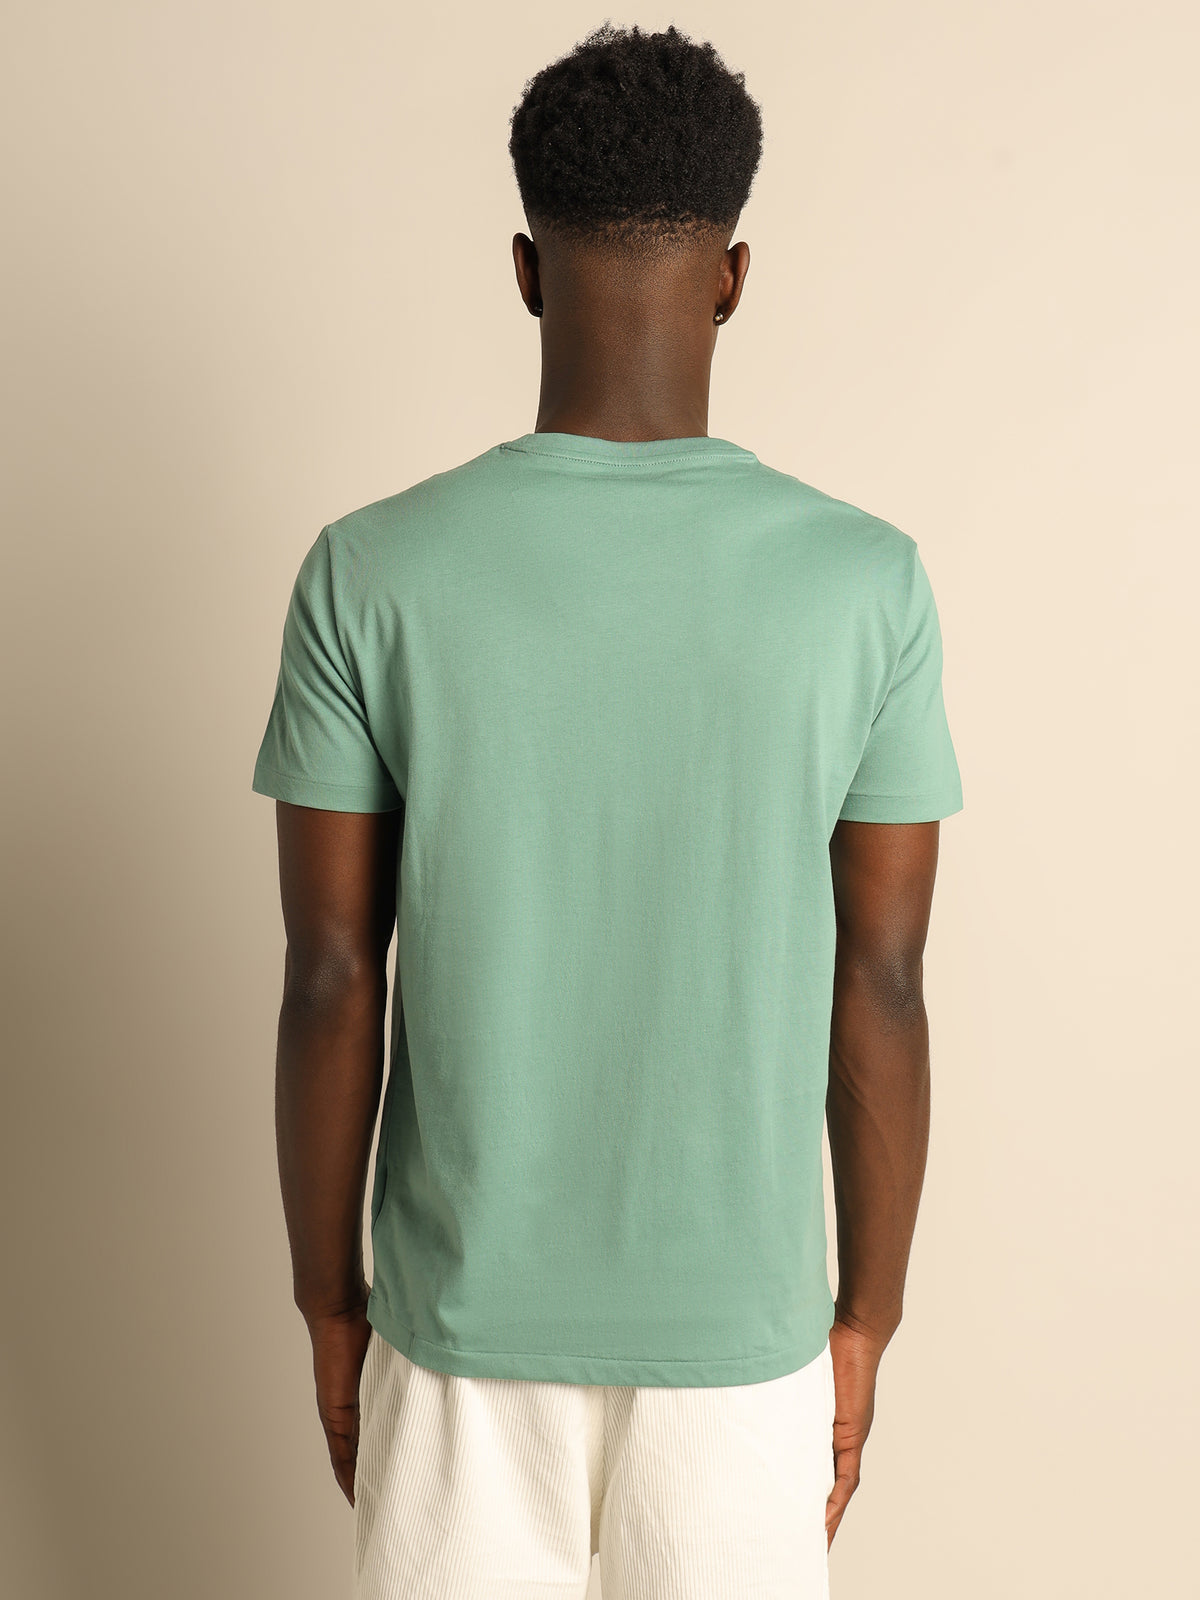 Custom Slim Fit T-Shirt in Seafoam